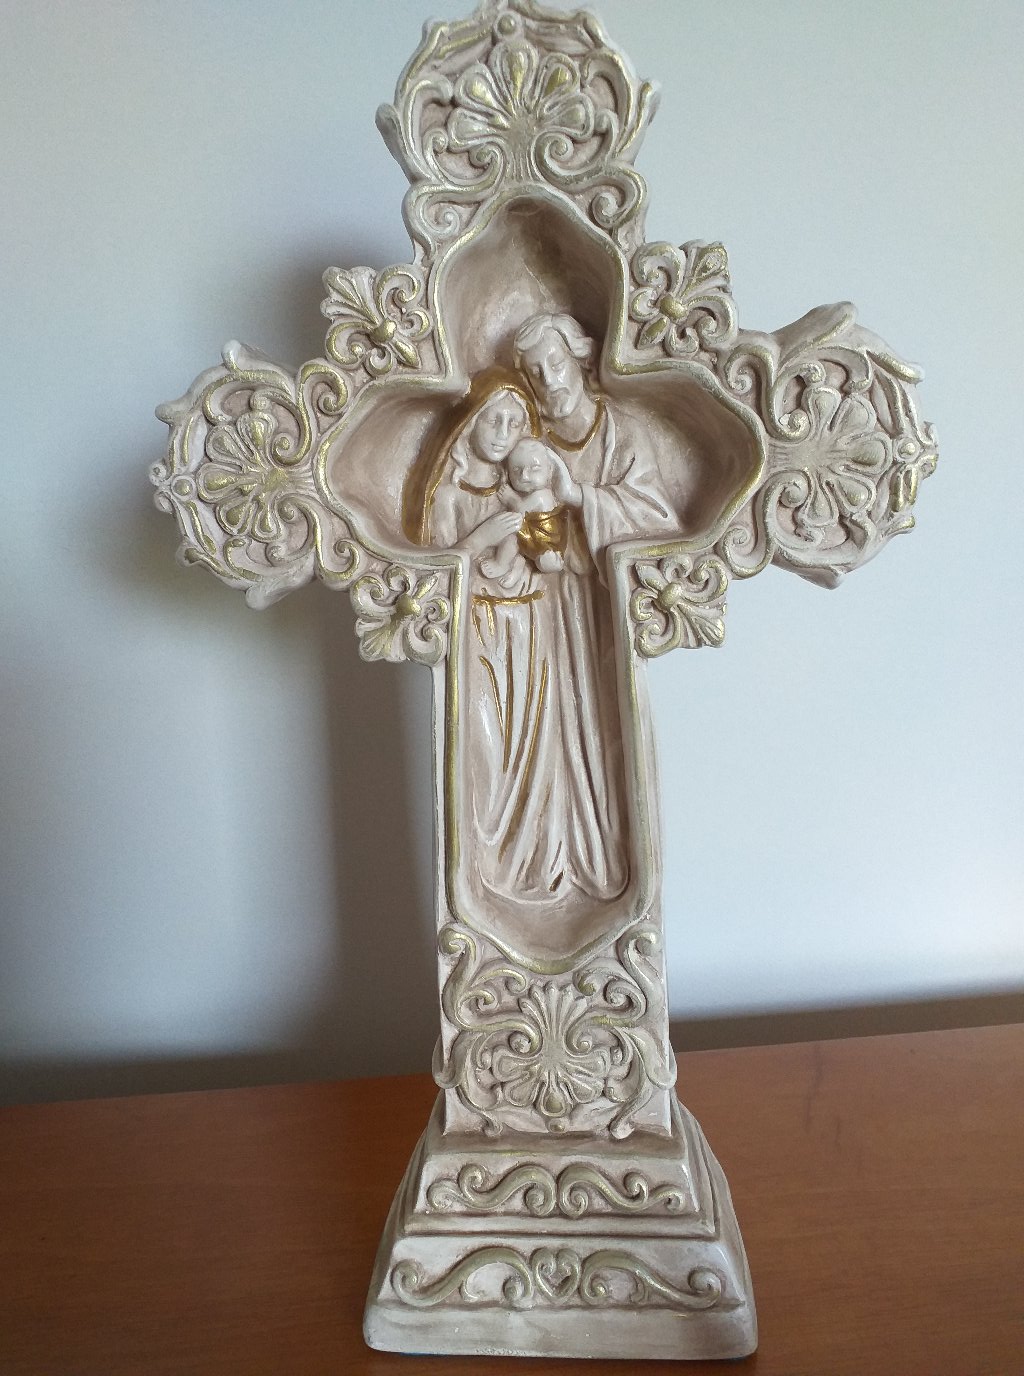 Kit Crucifixo Vazado 3,8 X 2,7CM e Entremeio Sagrada Família